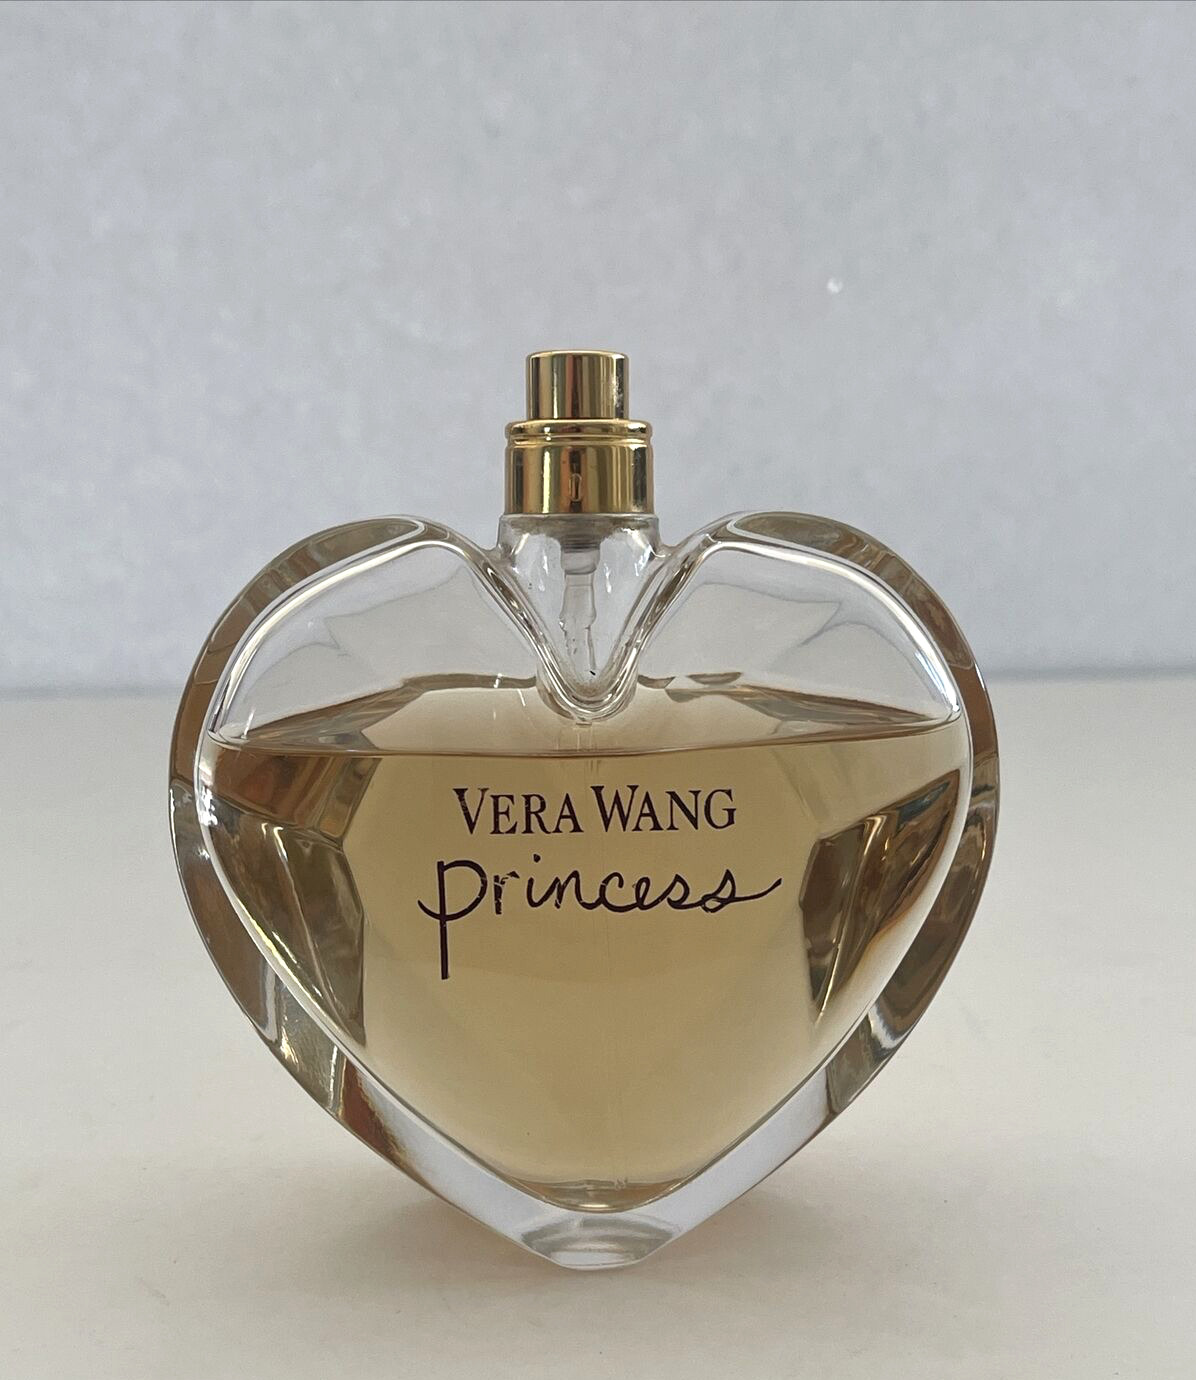 Princess Vera Wang Eau de Toilette Perfume Spray 3.4 fl oz **READ